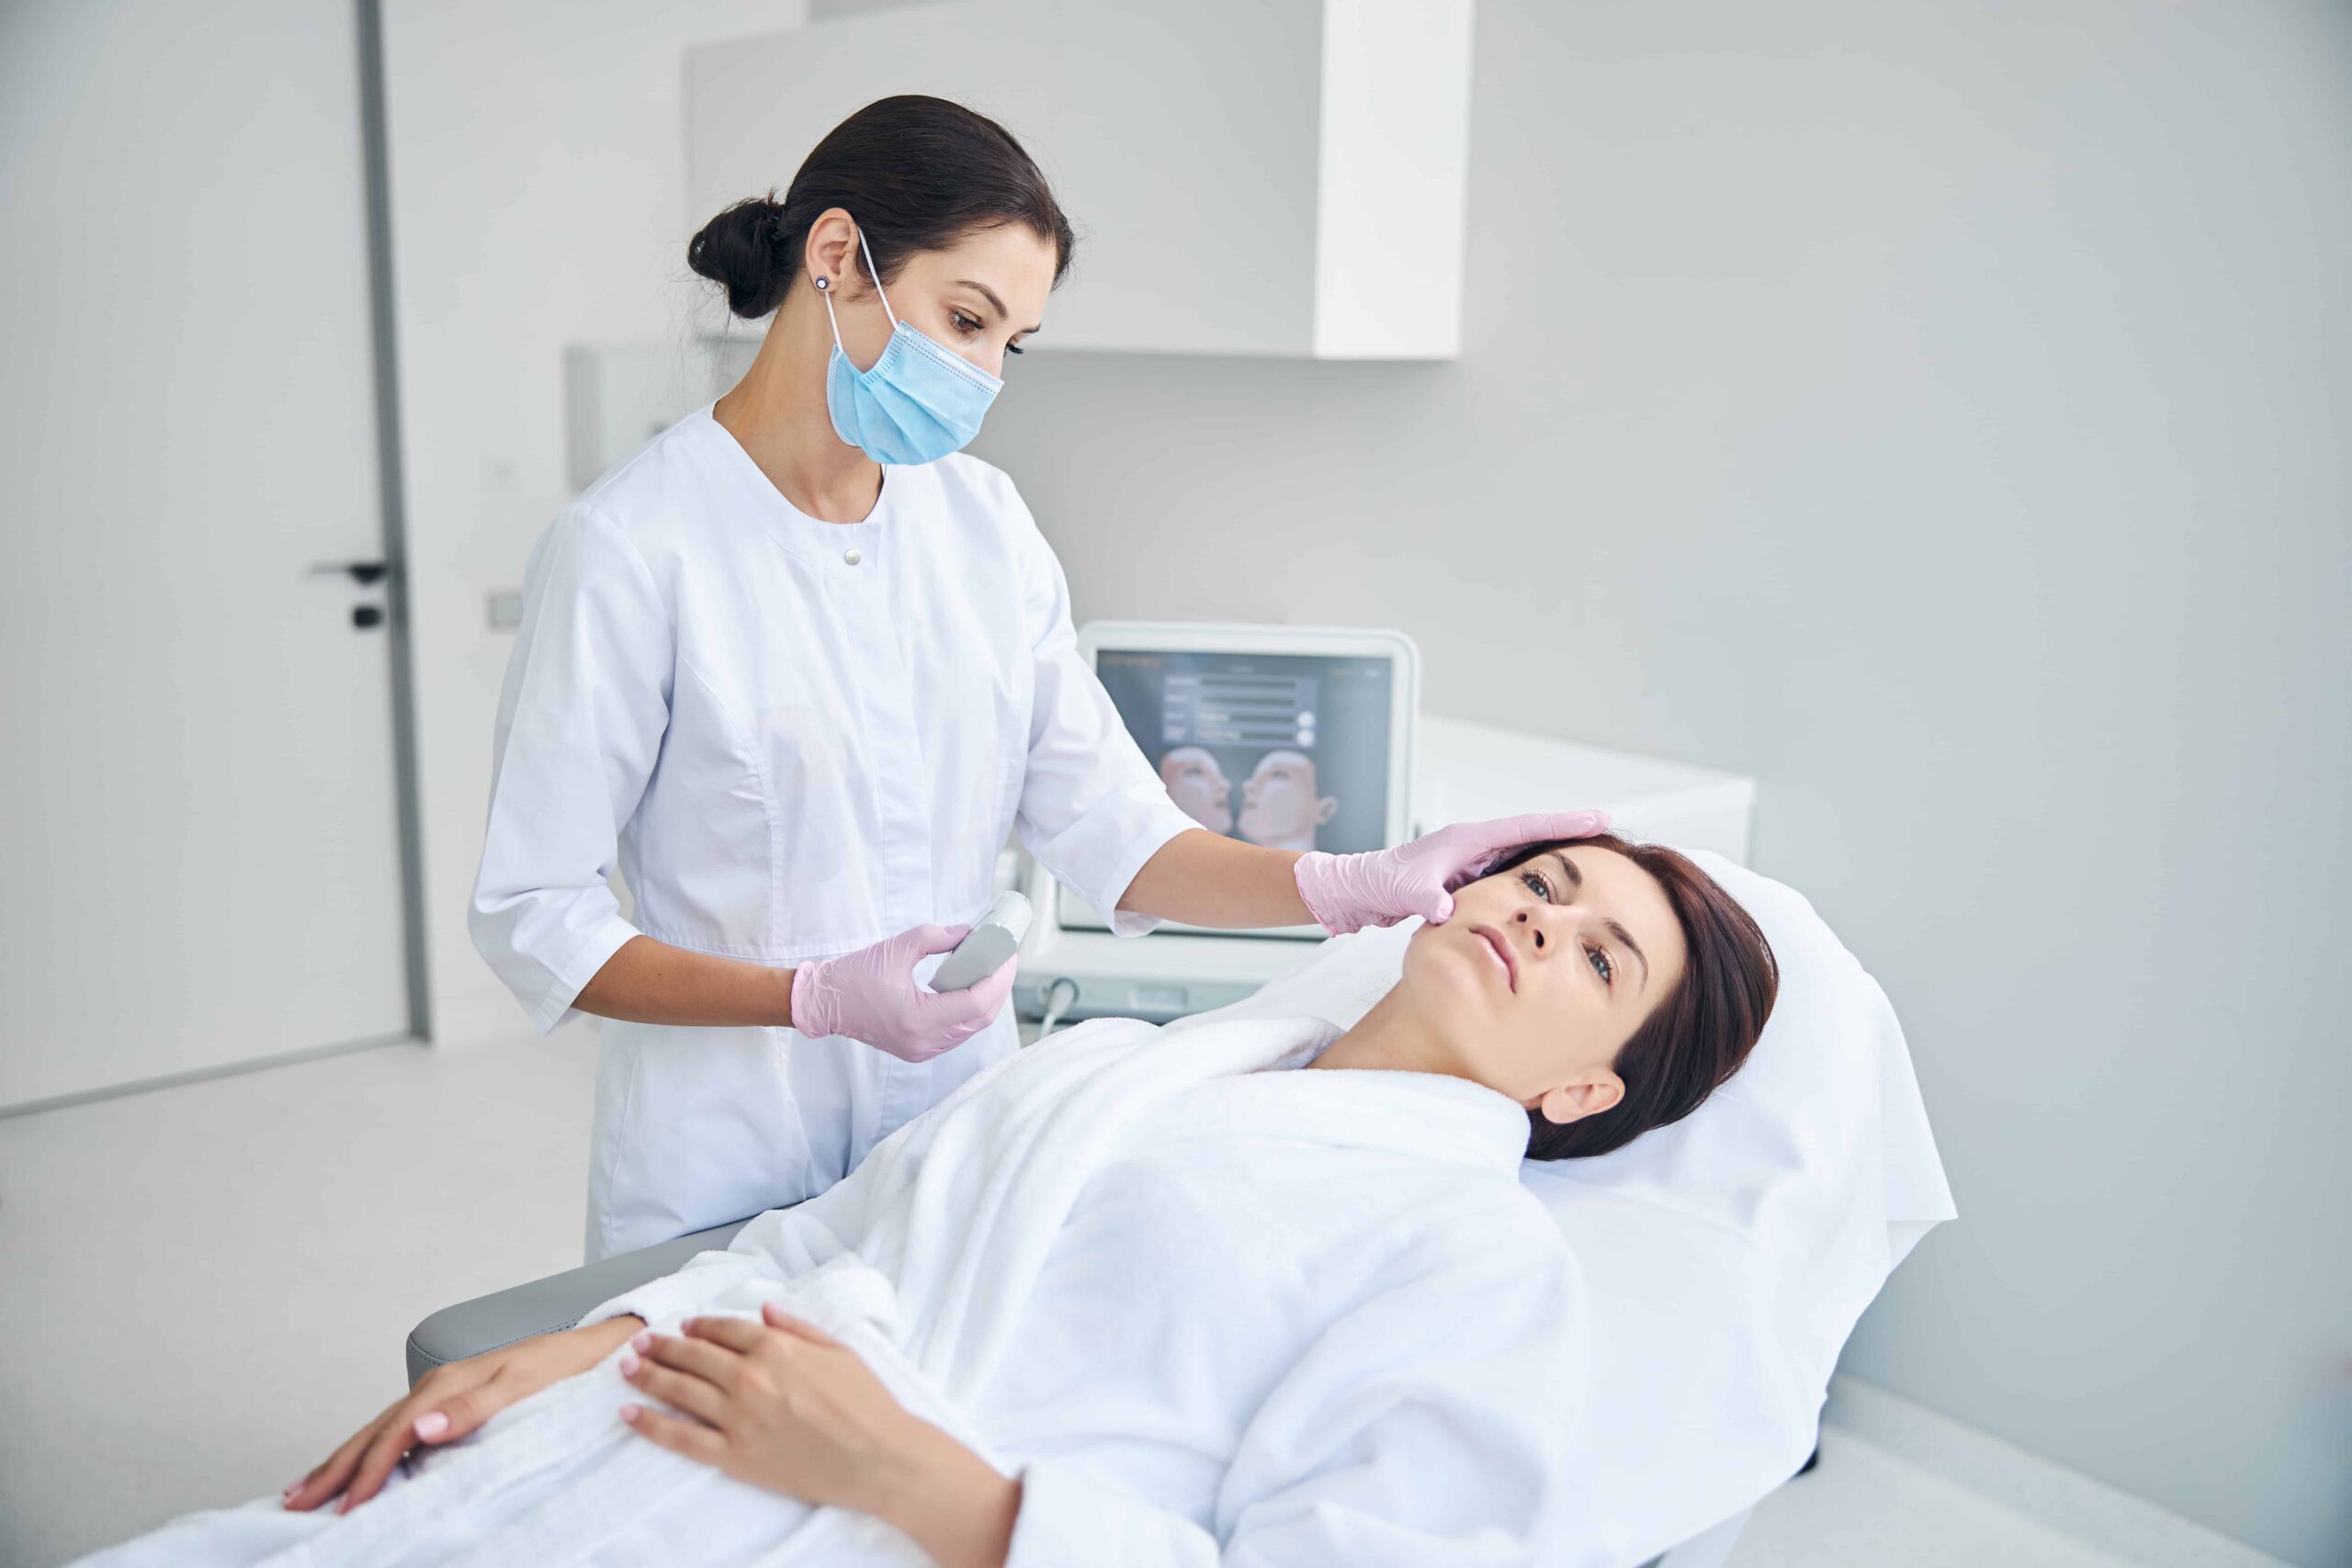 Dermatologist examining patient's skin